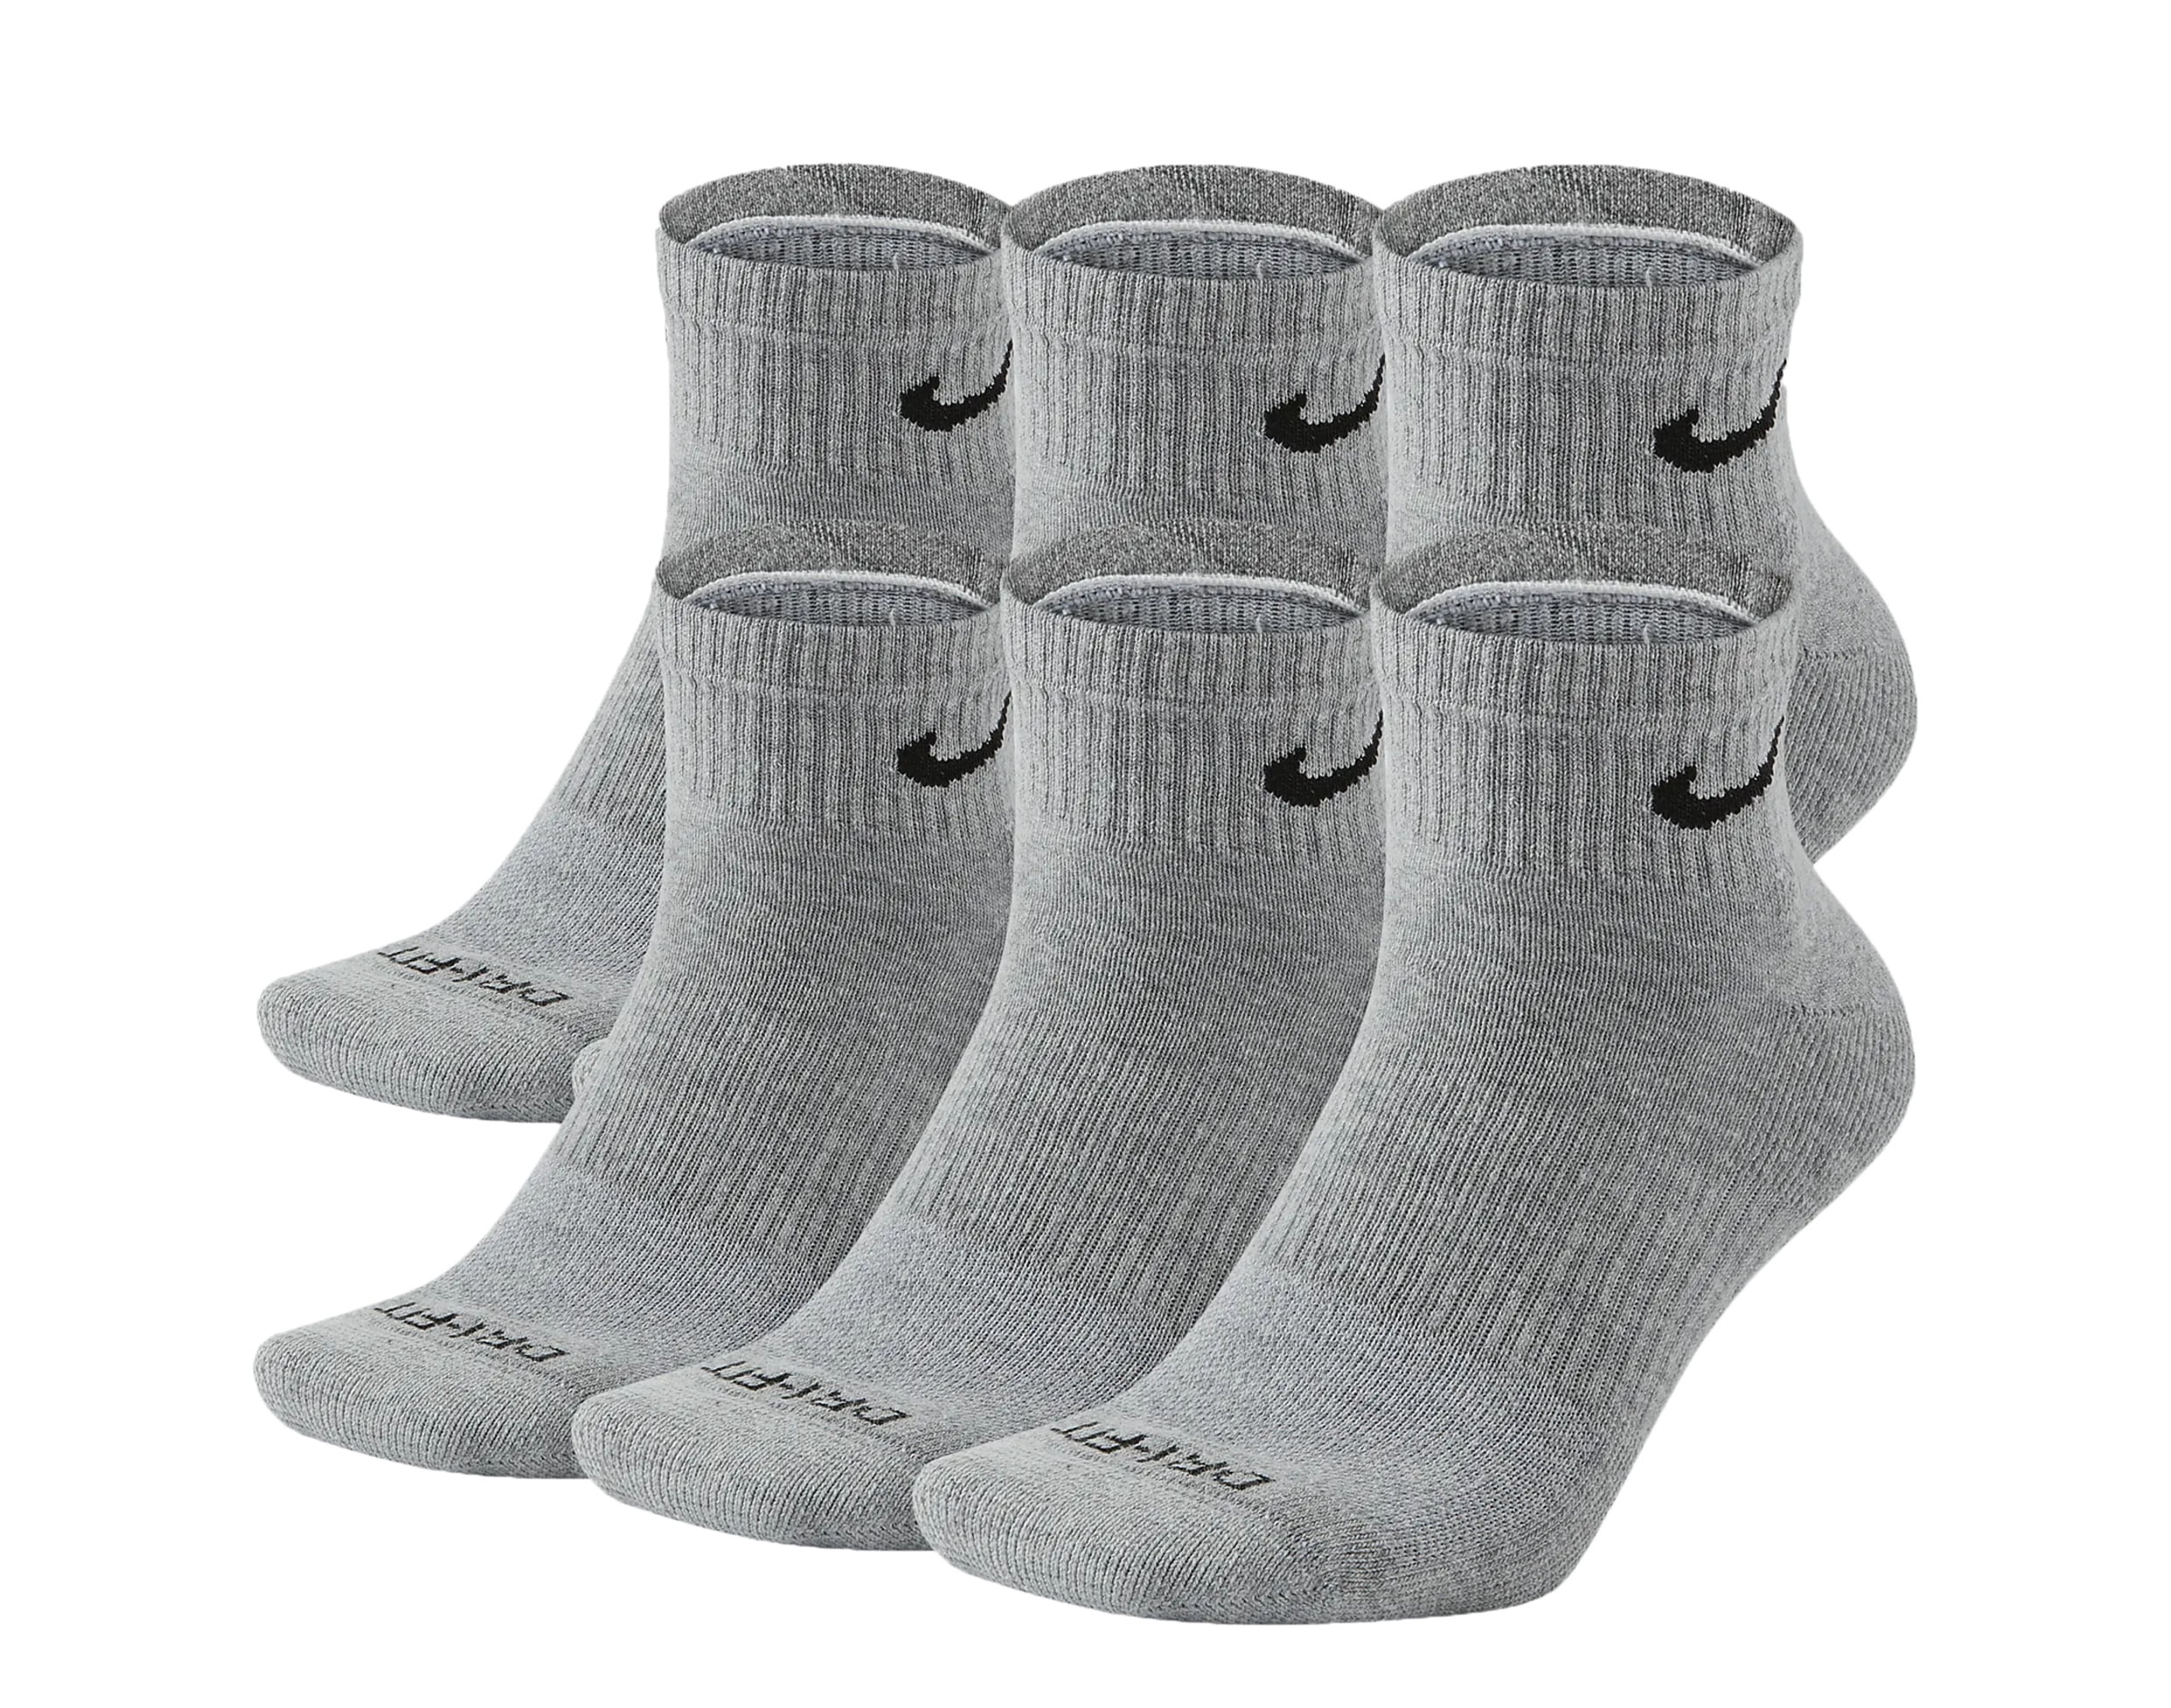 grey nike socks 6 pack